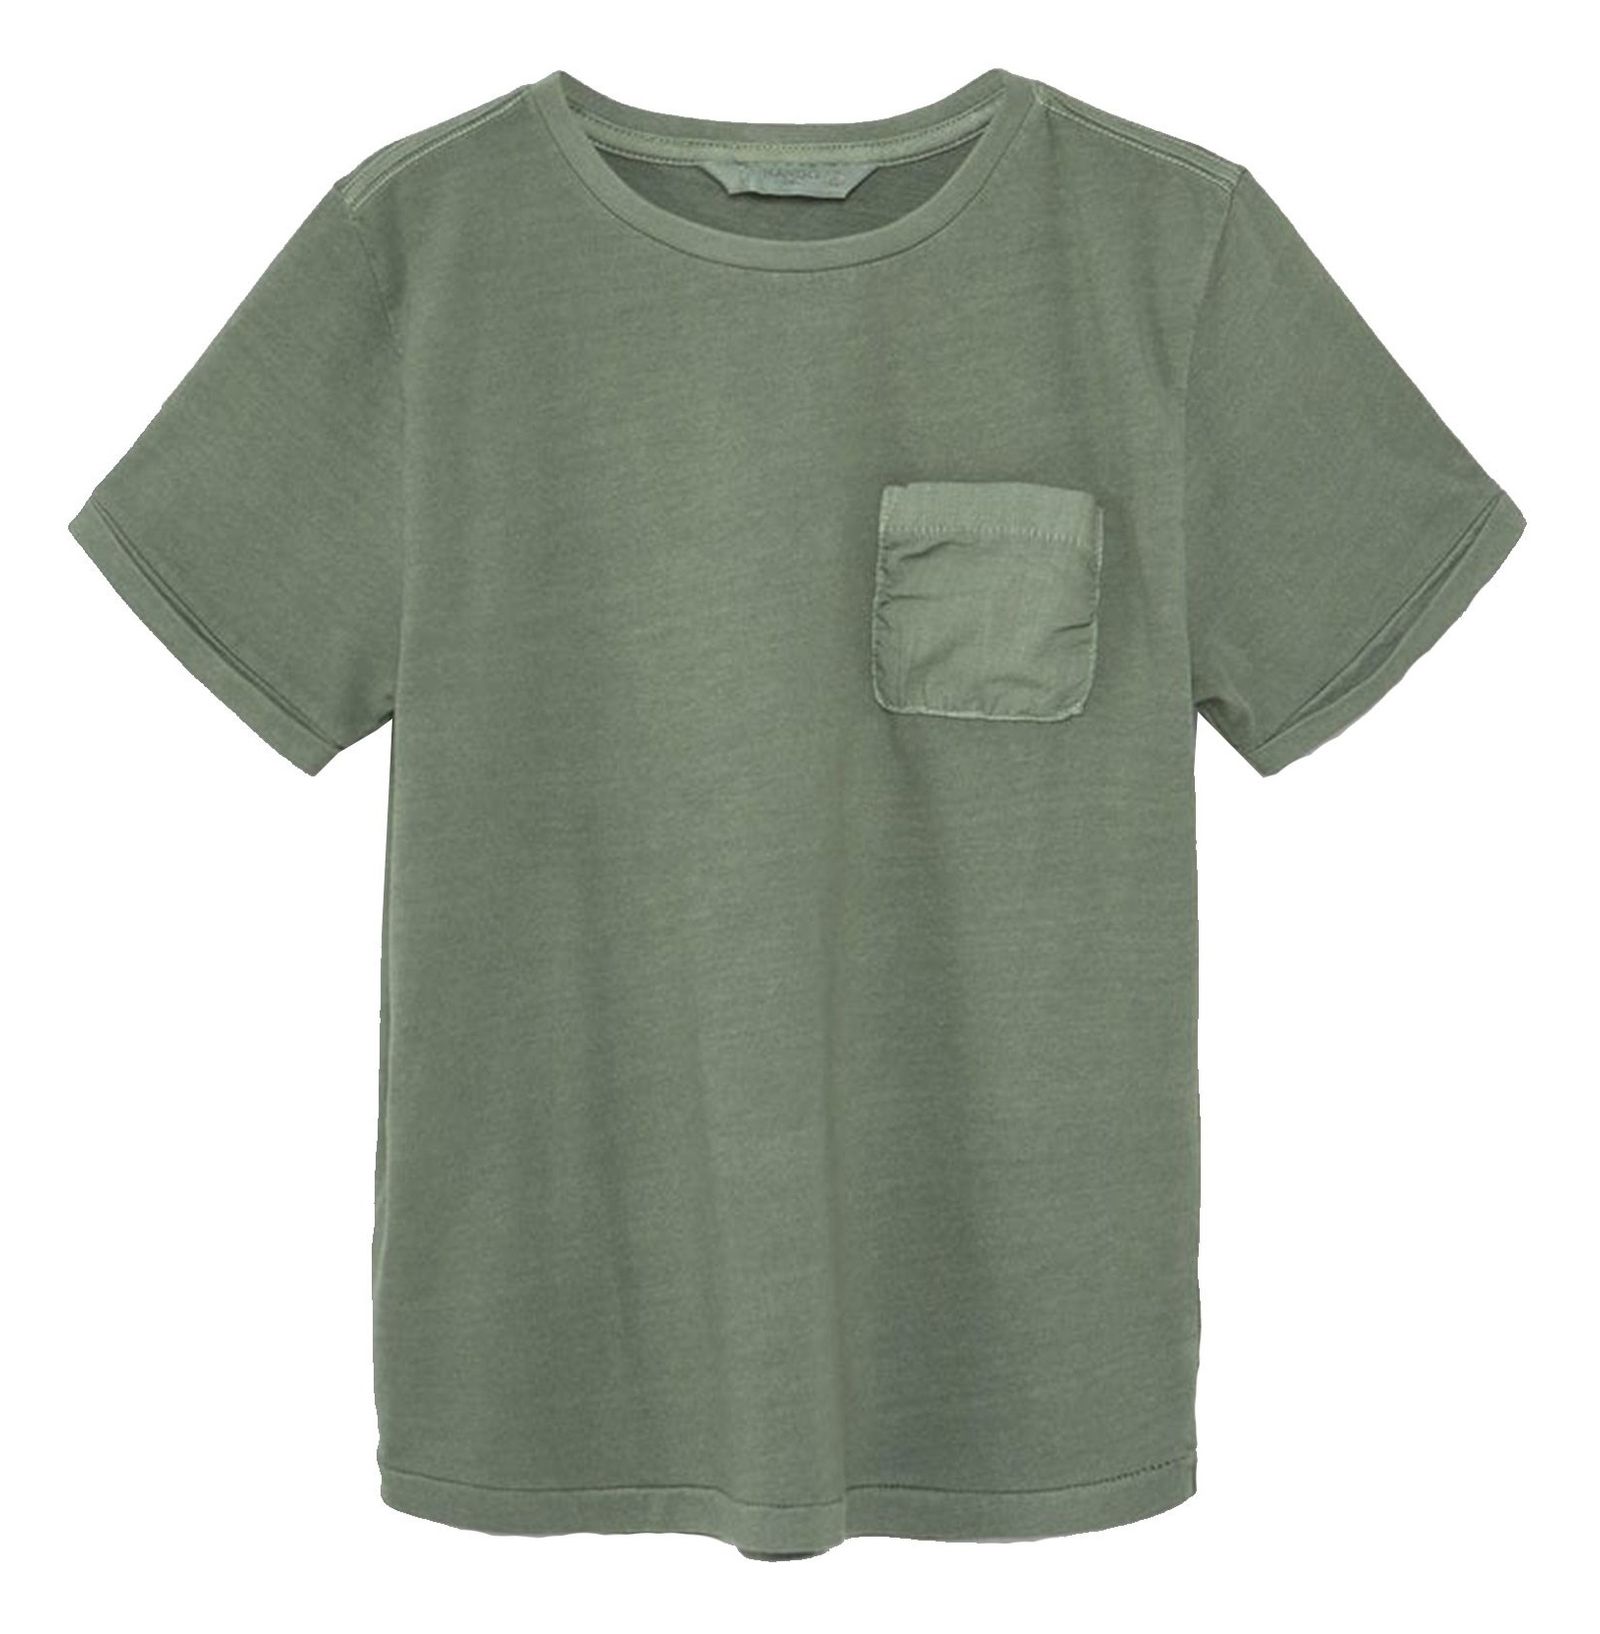 تی شرت نخی پسرانه - مانگو - سبز - 2